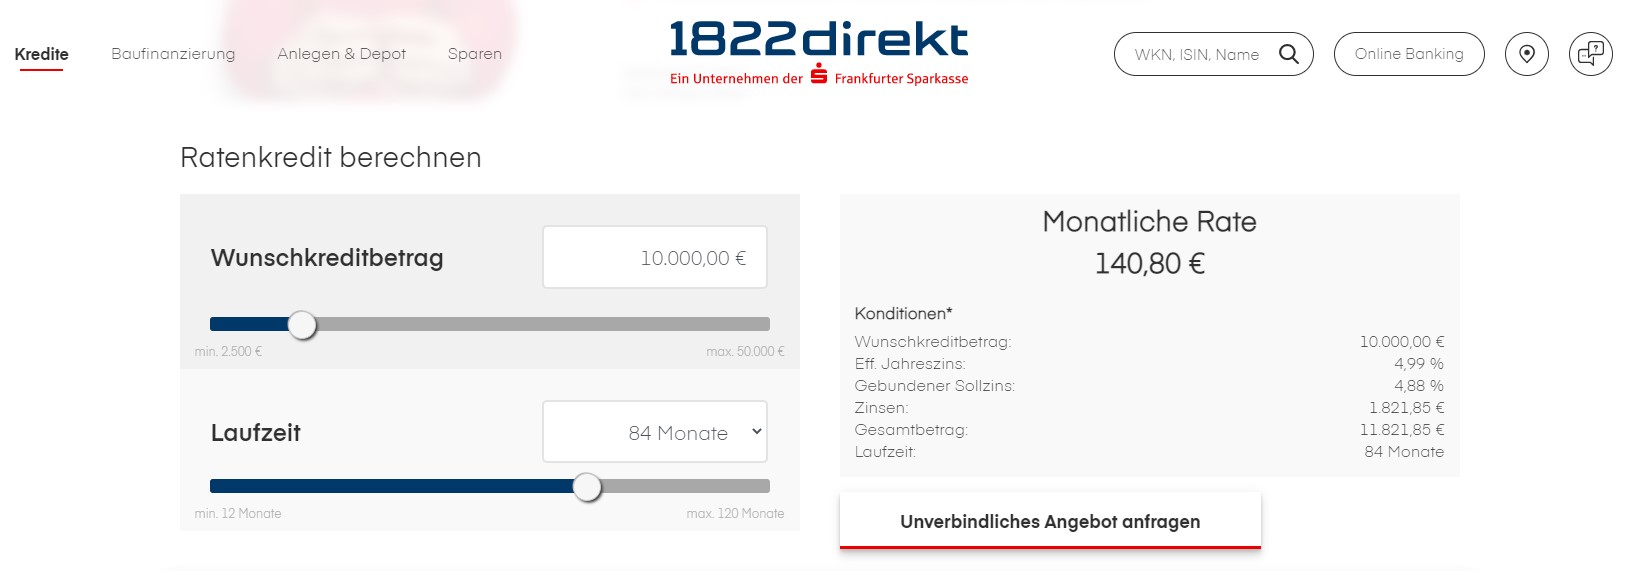 1822direkt private loans privatkredit in Germany